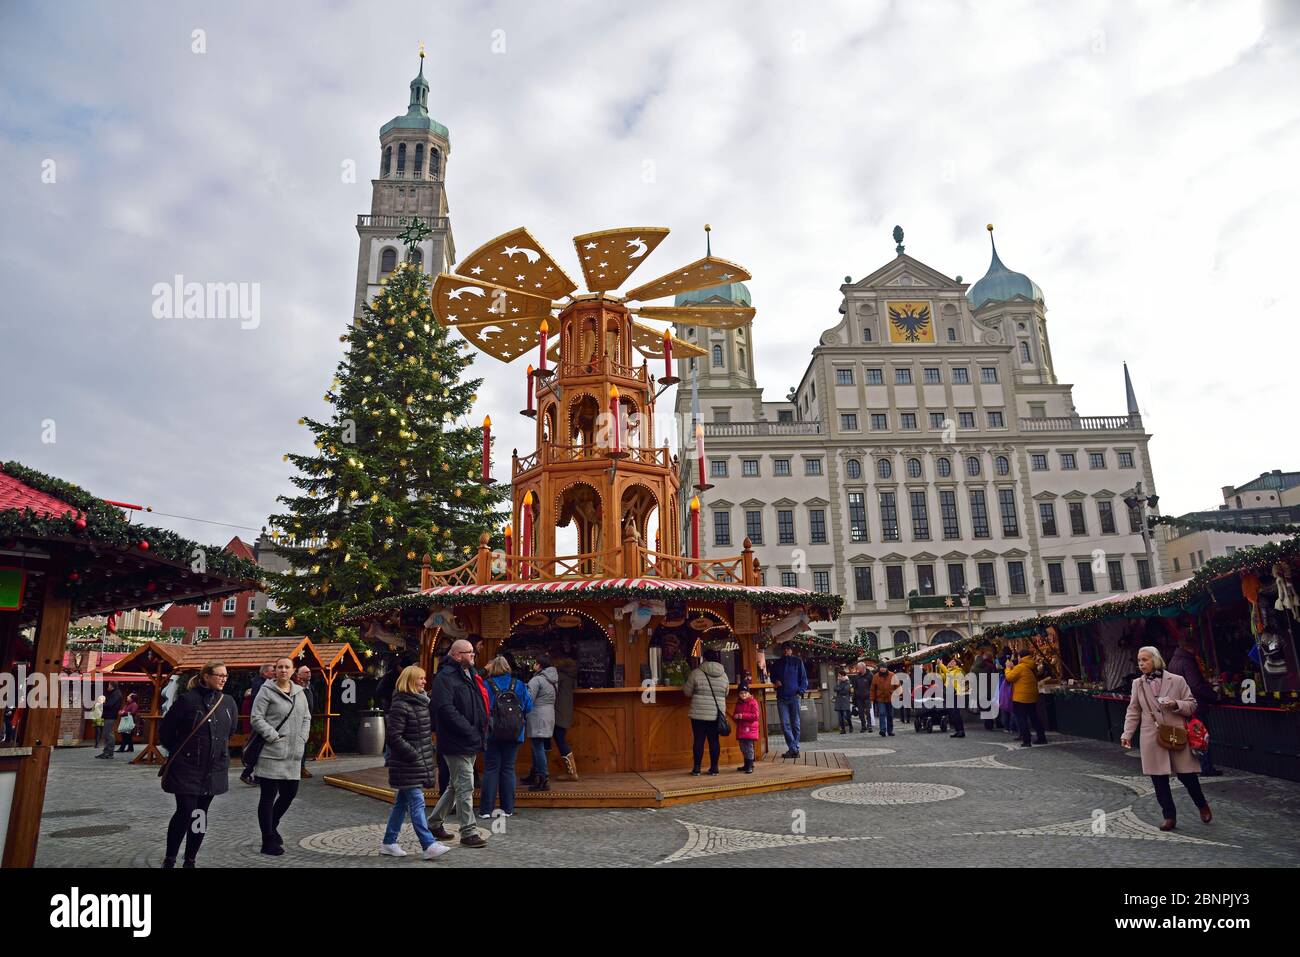 Europe, Germany, Bavaria, Swabia, Augsburg, Rathausmarkt, town hall, Renaissance, built 1615 to 1620, Perlach tower, 17 meters high, Christmas market, Stock Photo